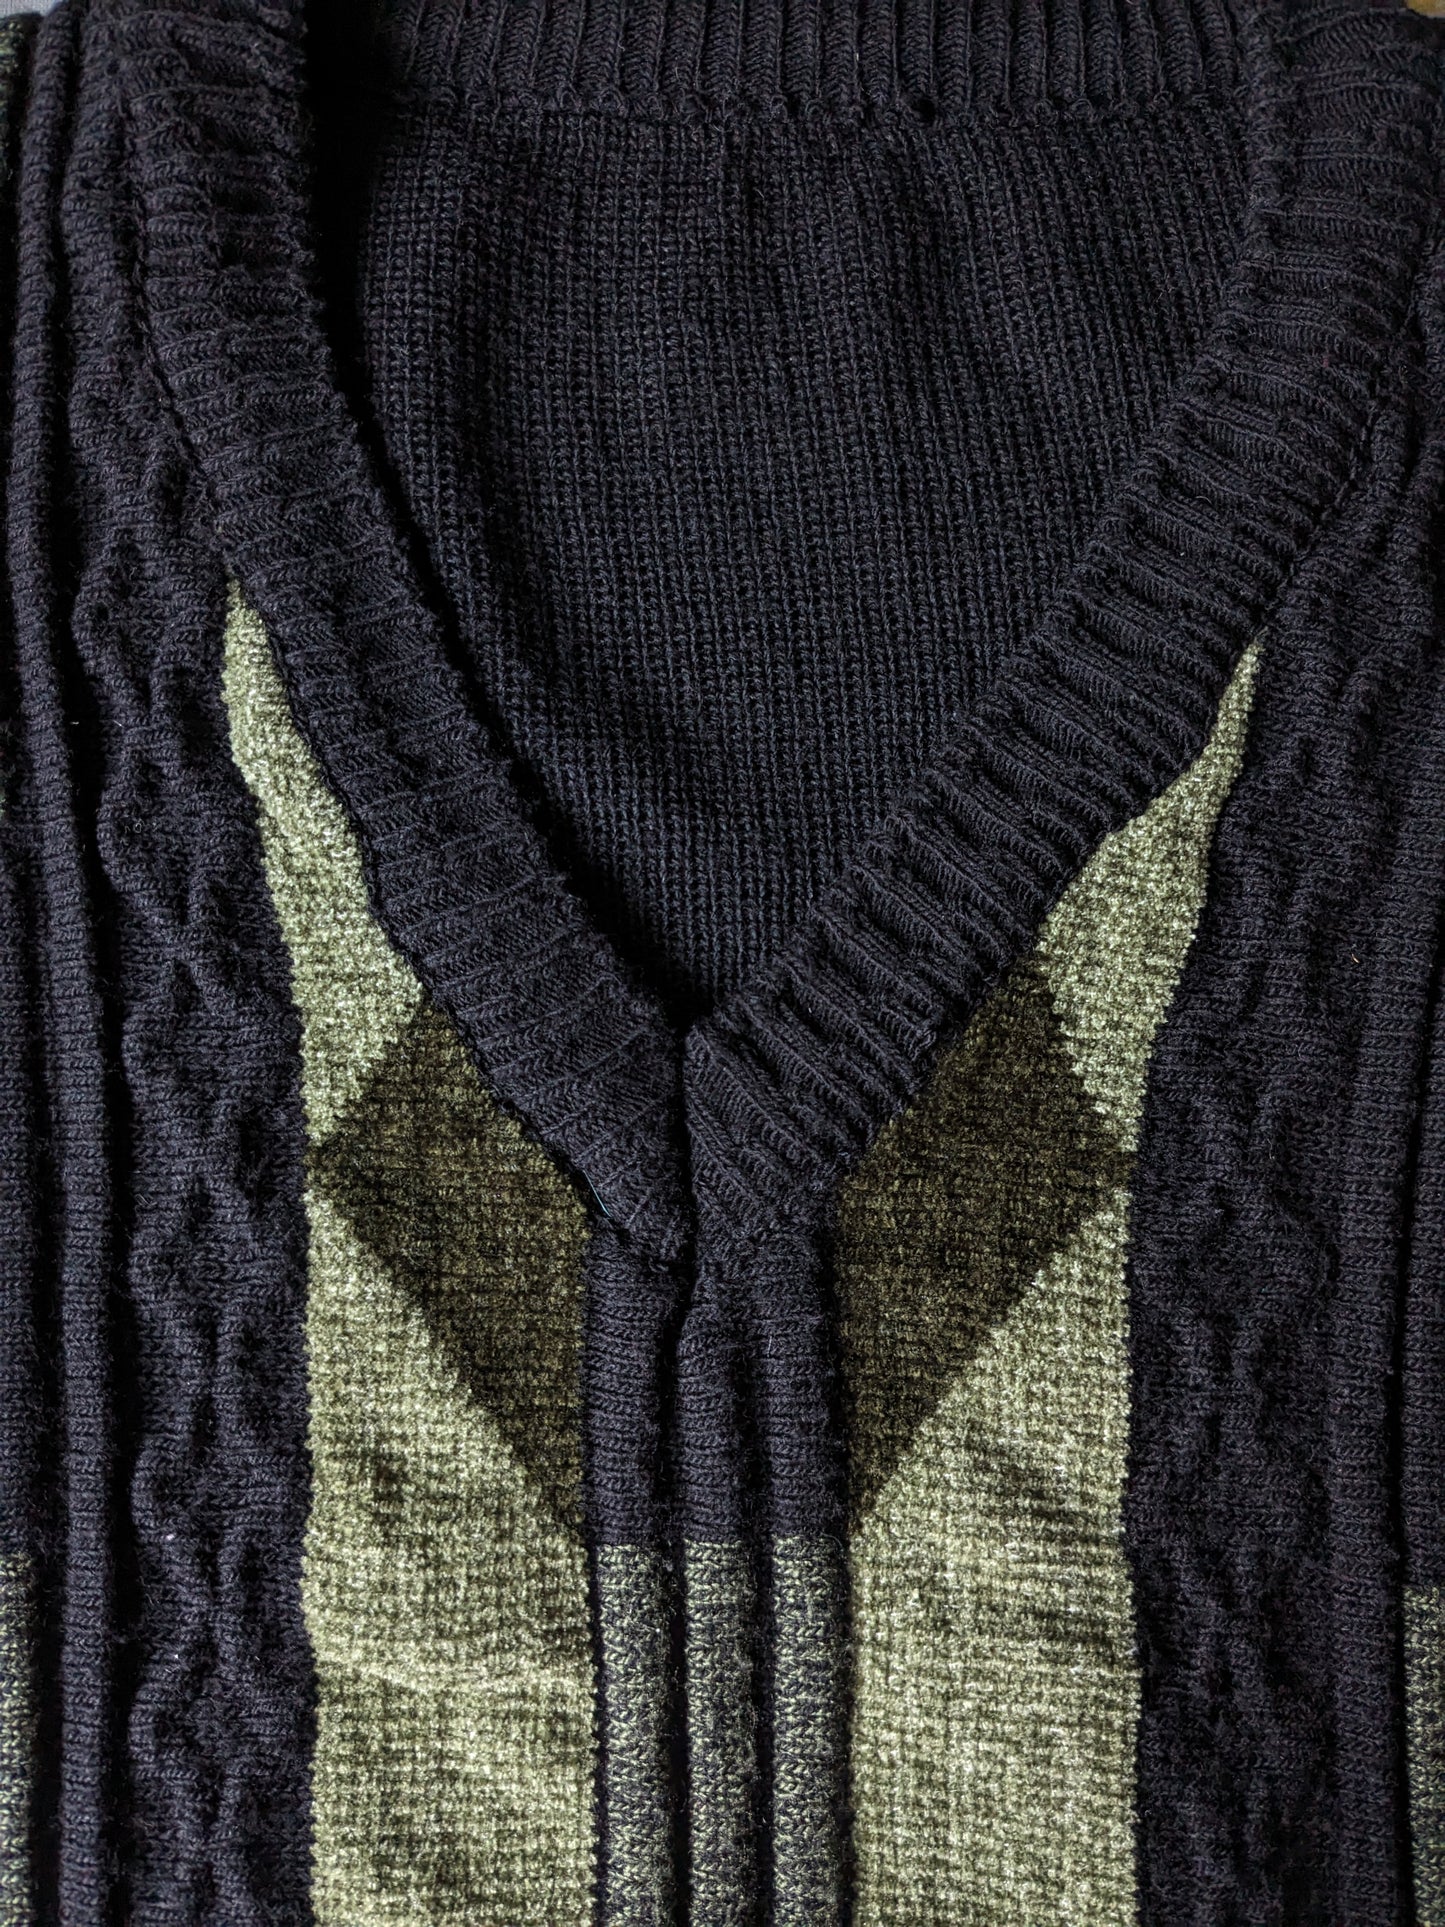 Vintage woolen sweater with v-neck. Black green colored. Size L.